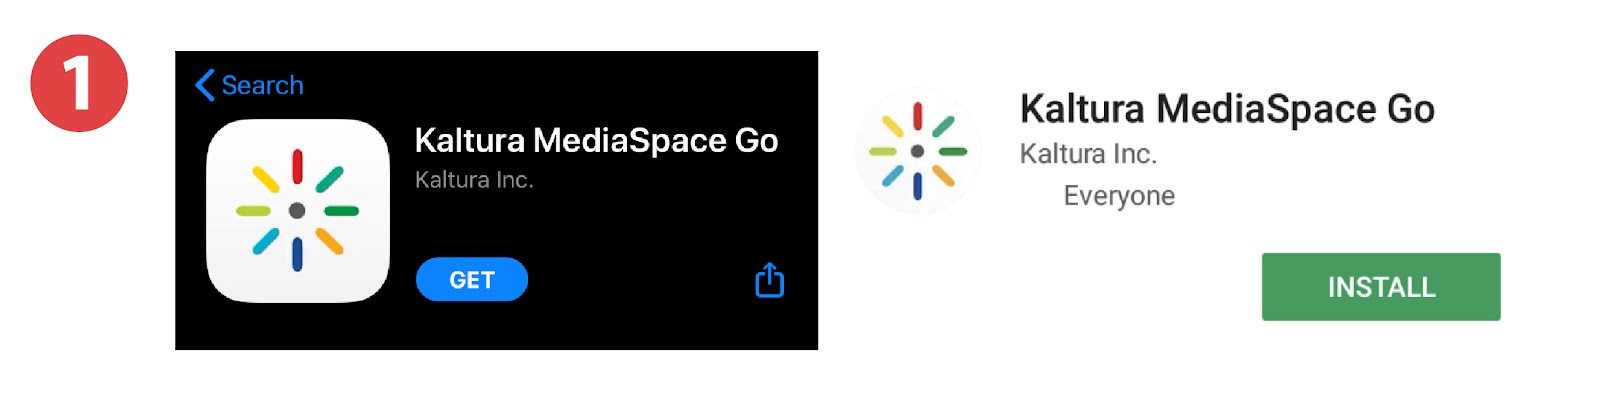 Kaltura MediaSpace Go in the App Store